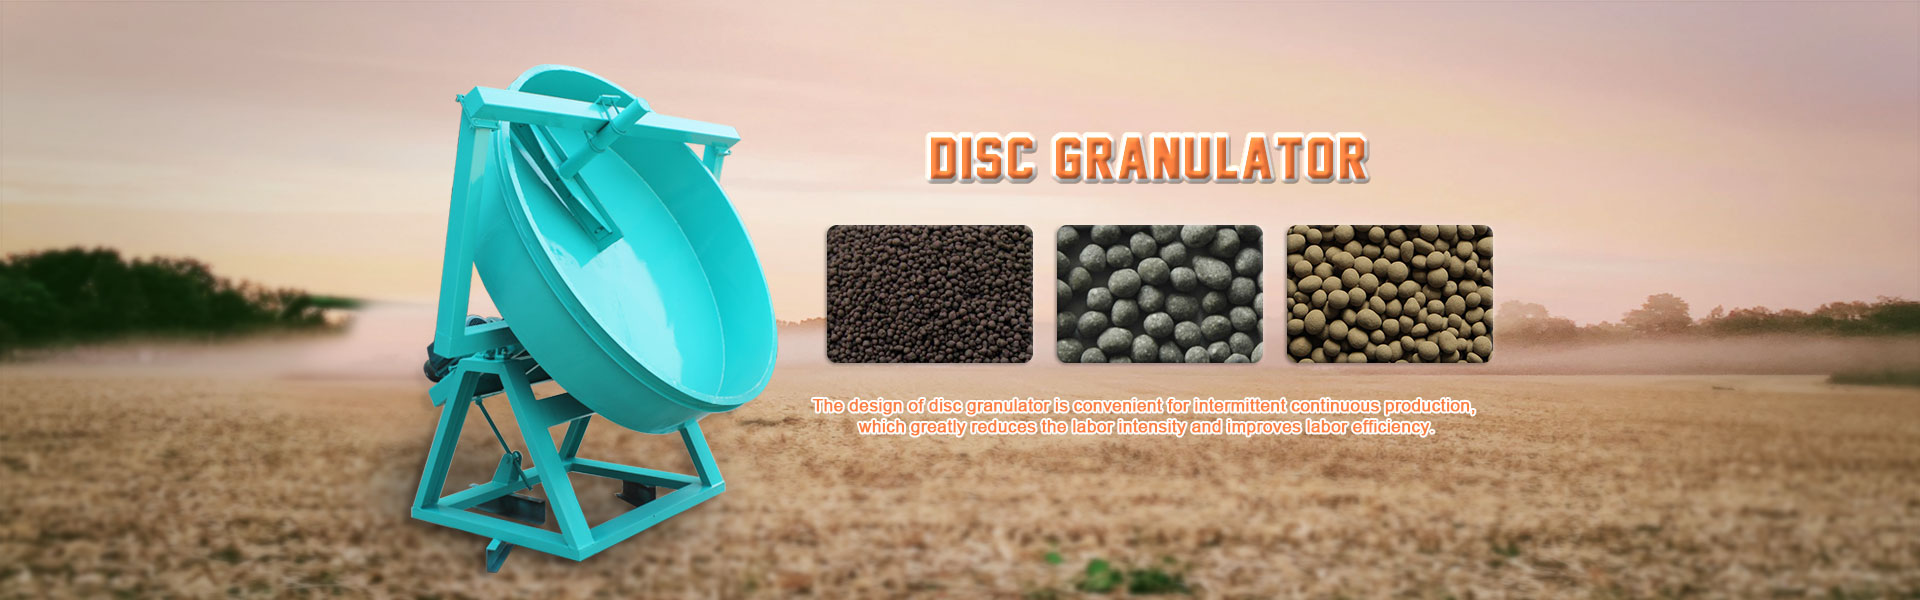 Disc Granulator